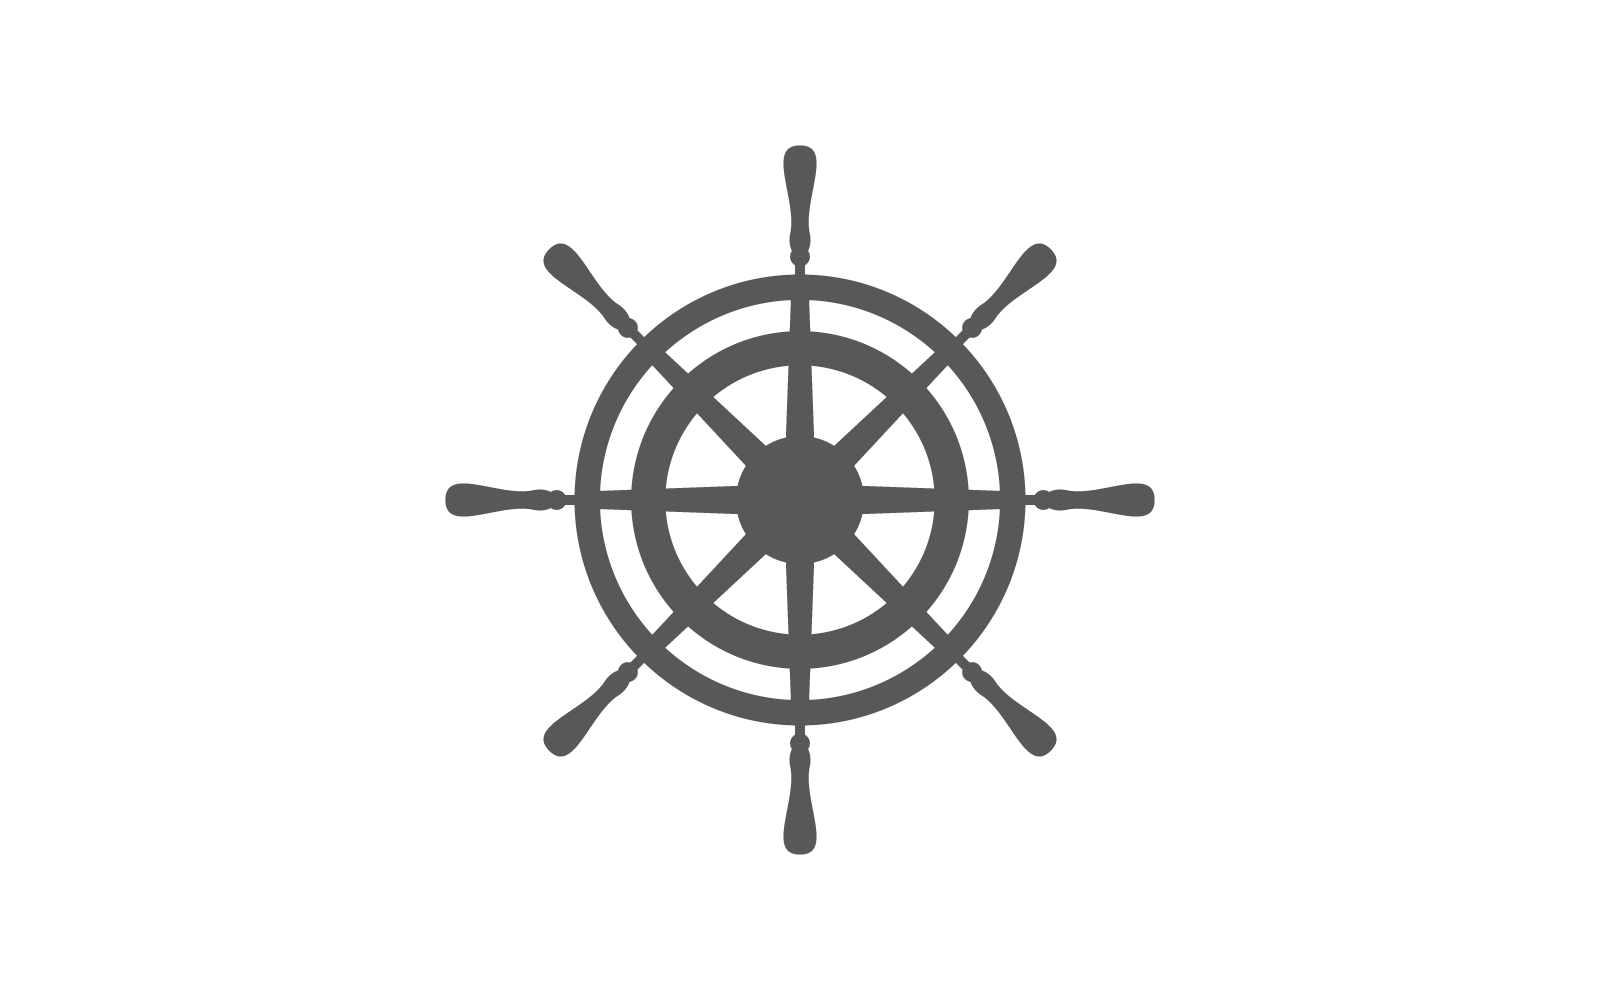 Ship wheel icon ilustration vector